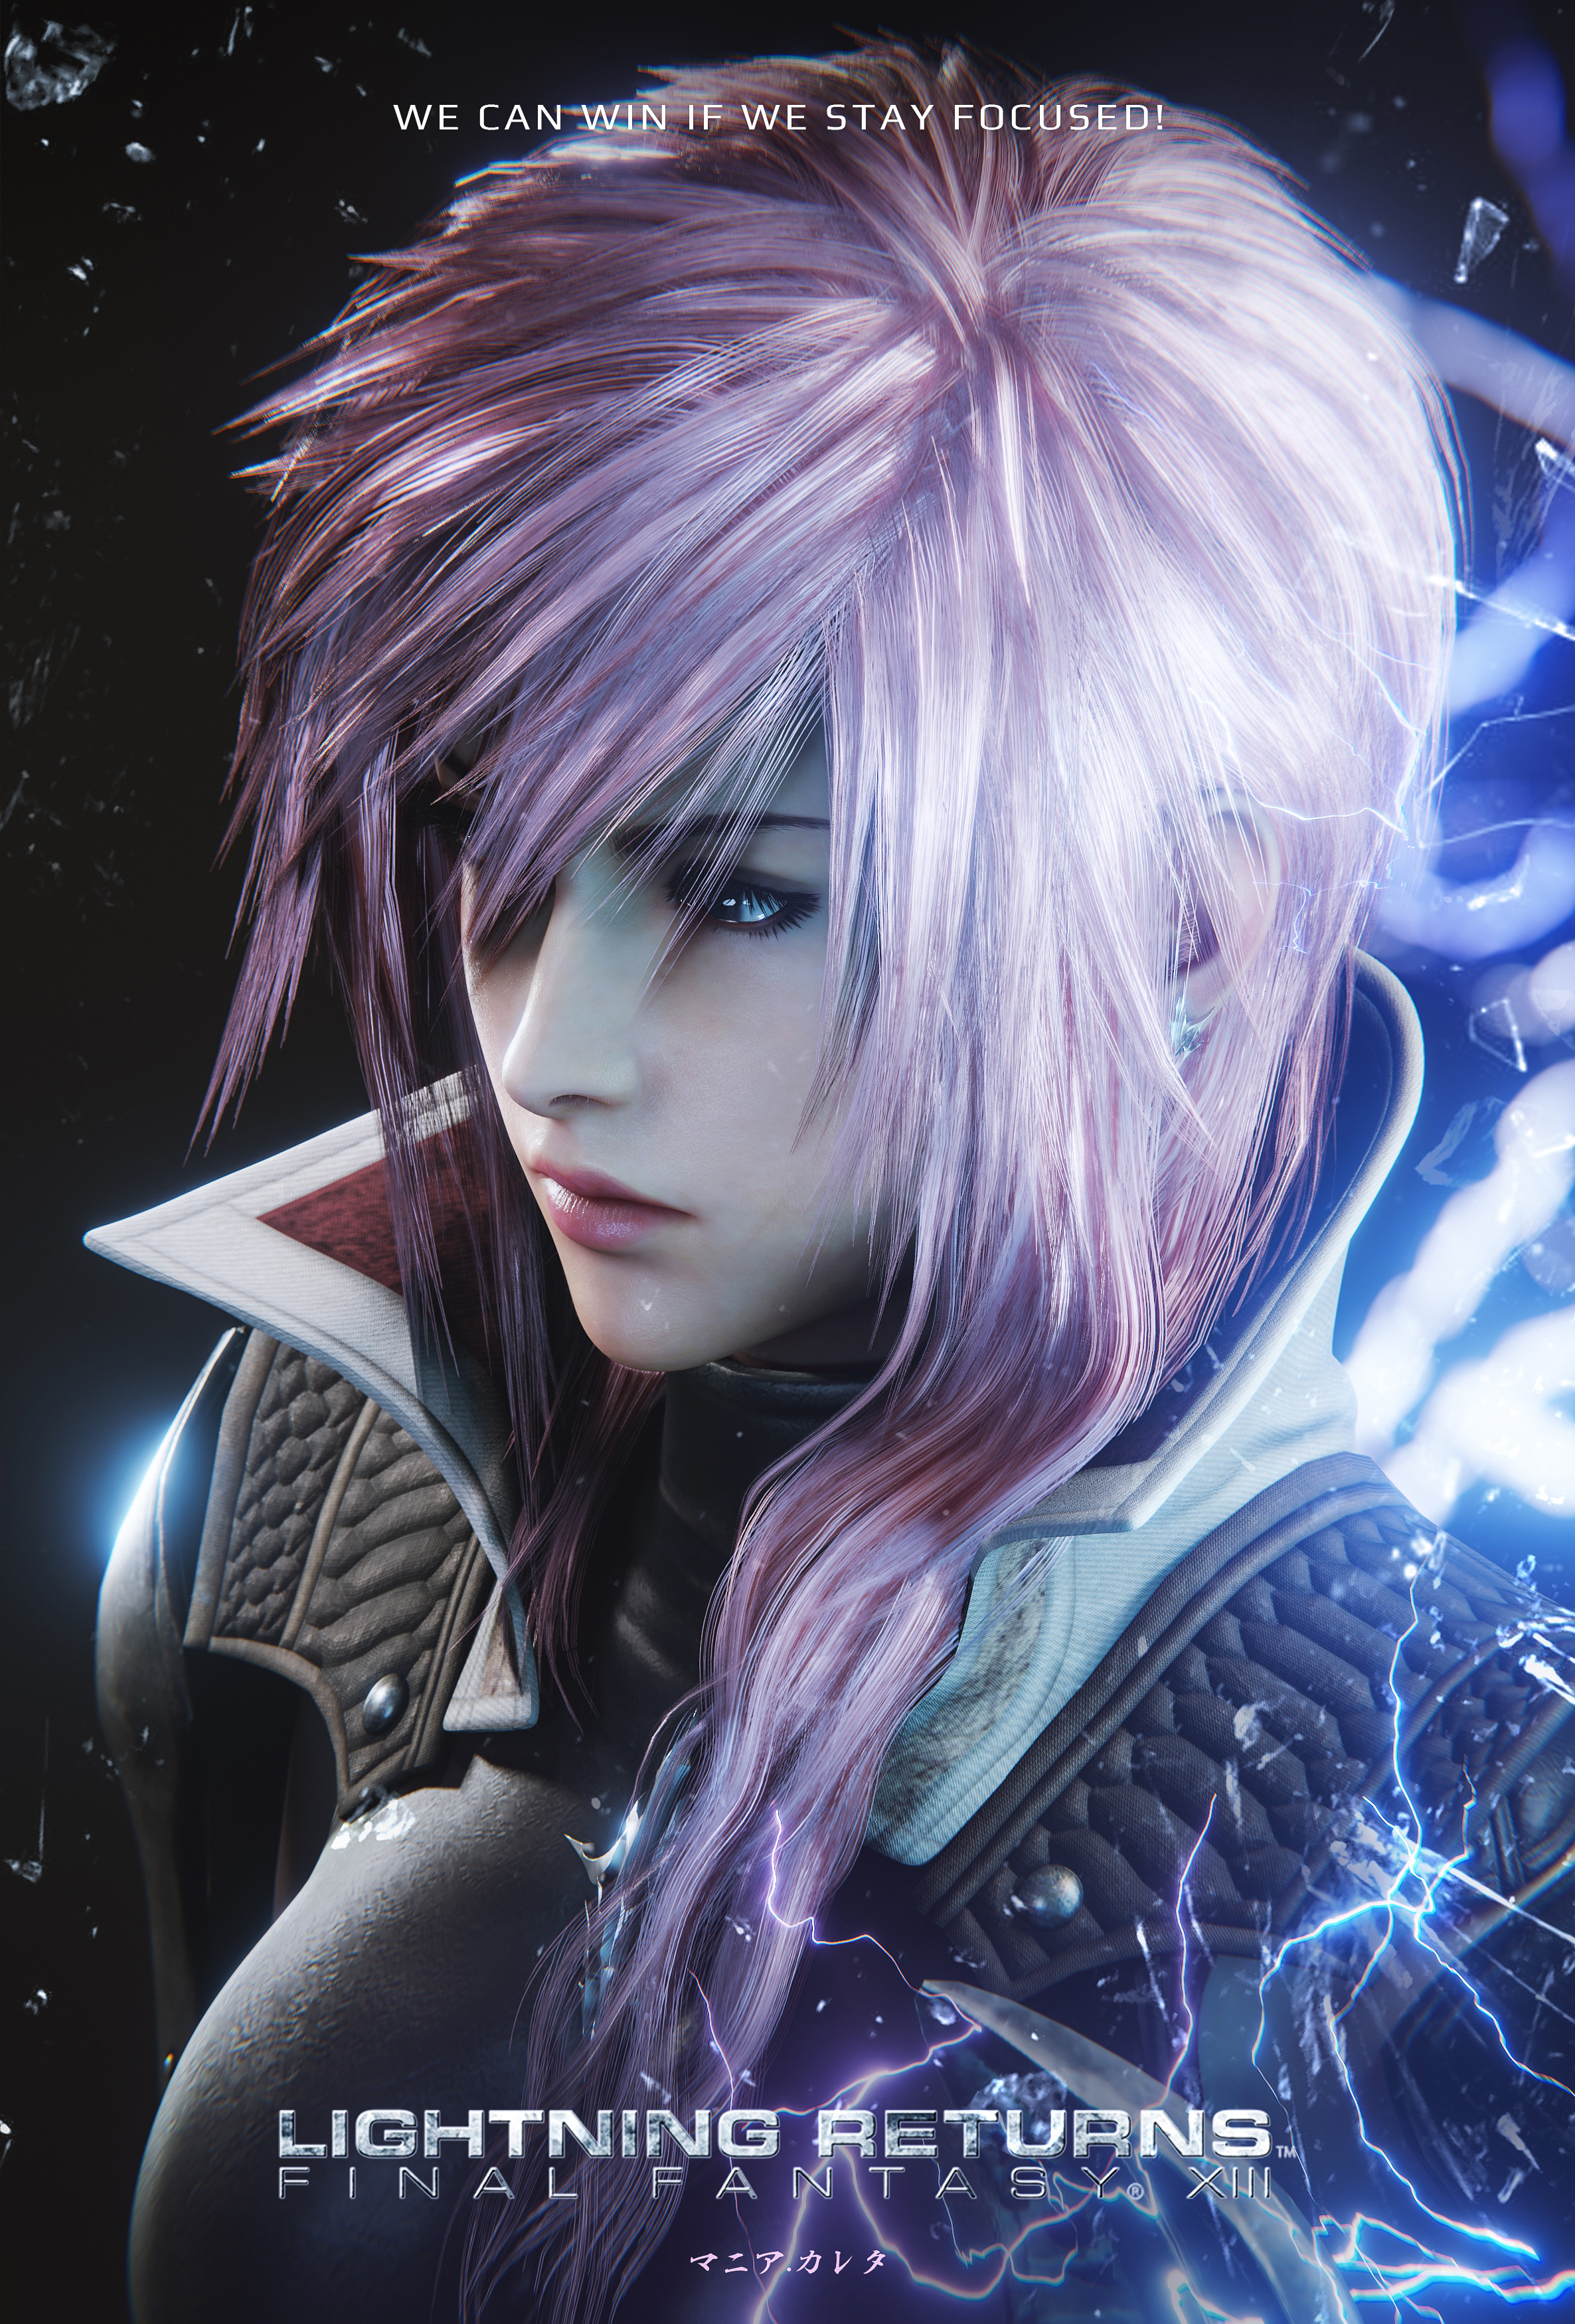 Lightning Final Fantasy XIII (EEVEE) - Finished Projects - Blender